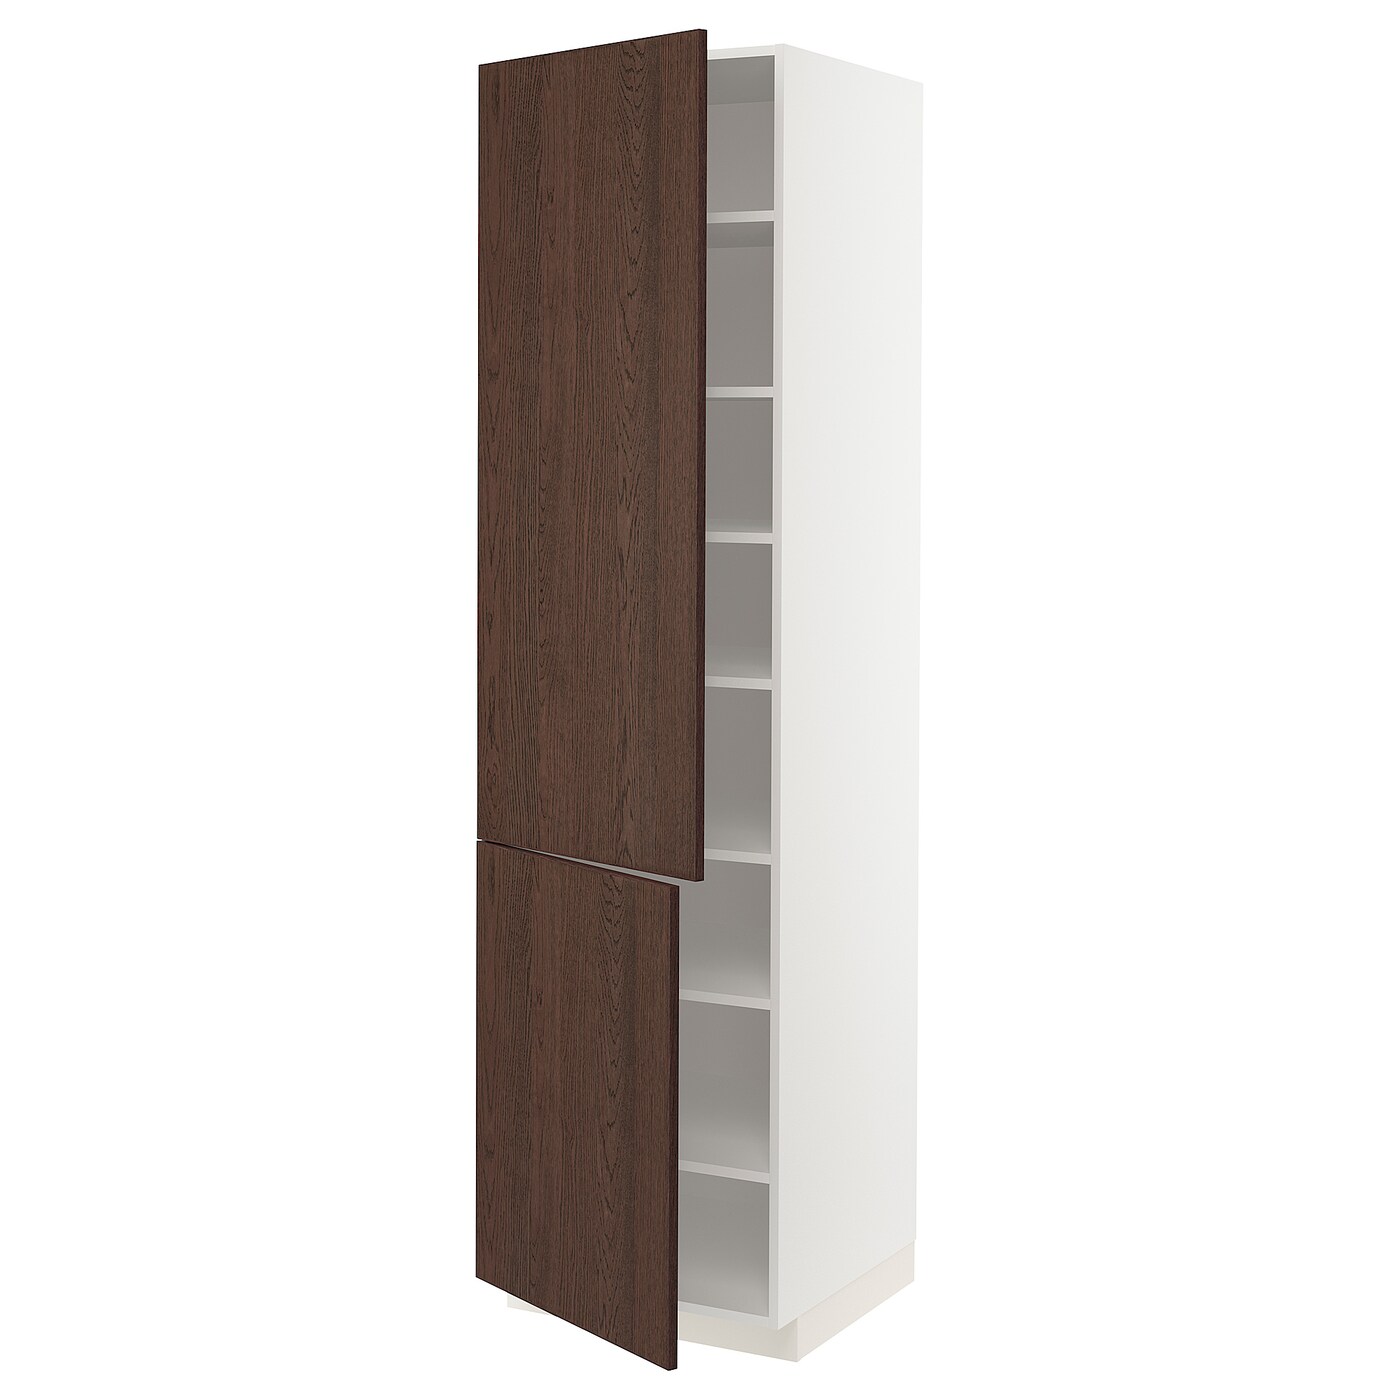 Высокий шкаф - IKEA METOD/МЕТОД ИКЕА, 220х60х60 см, белый/коричневый